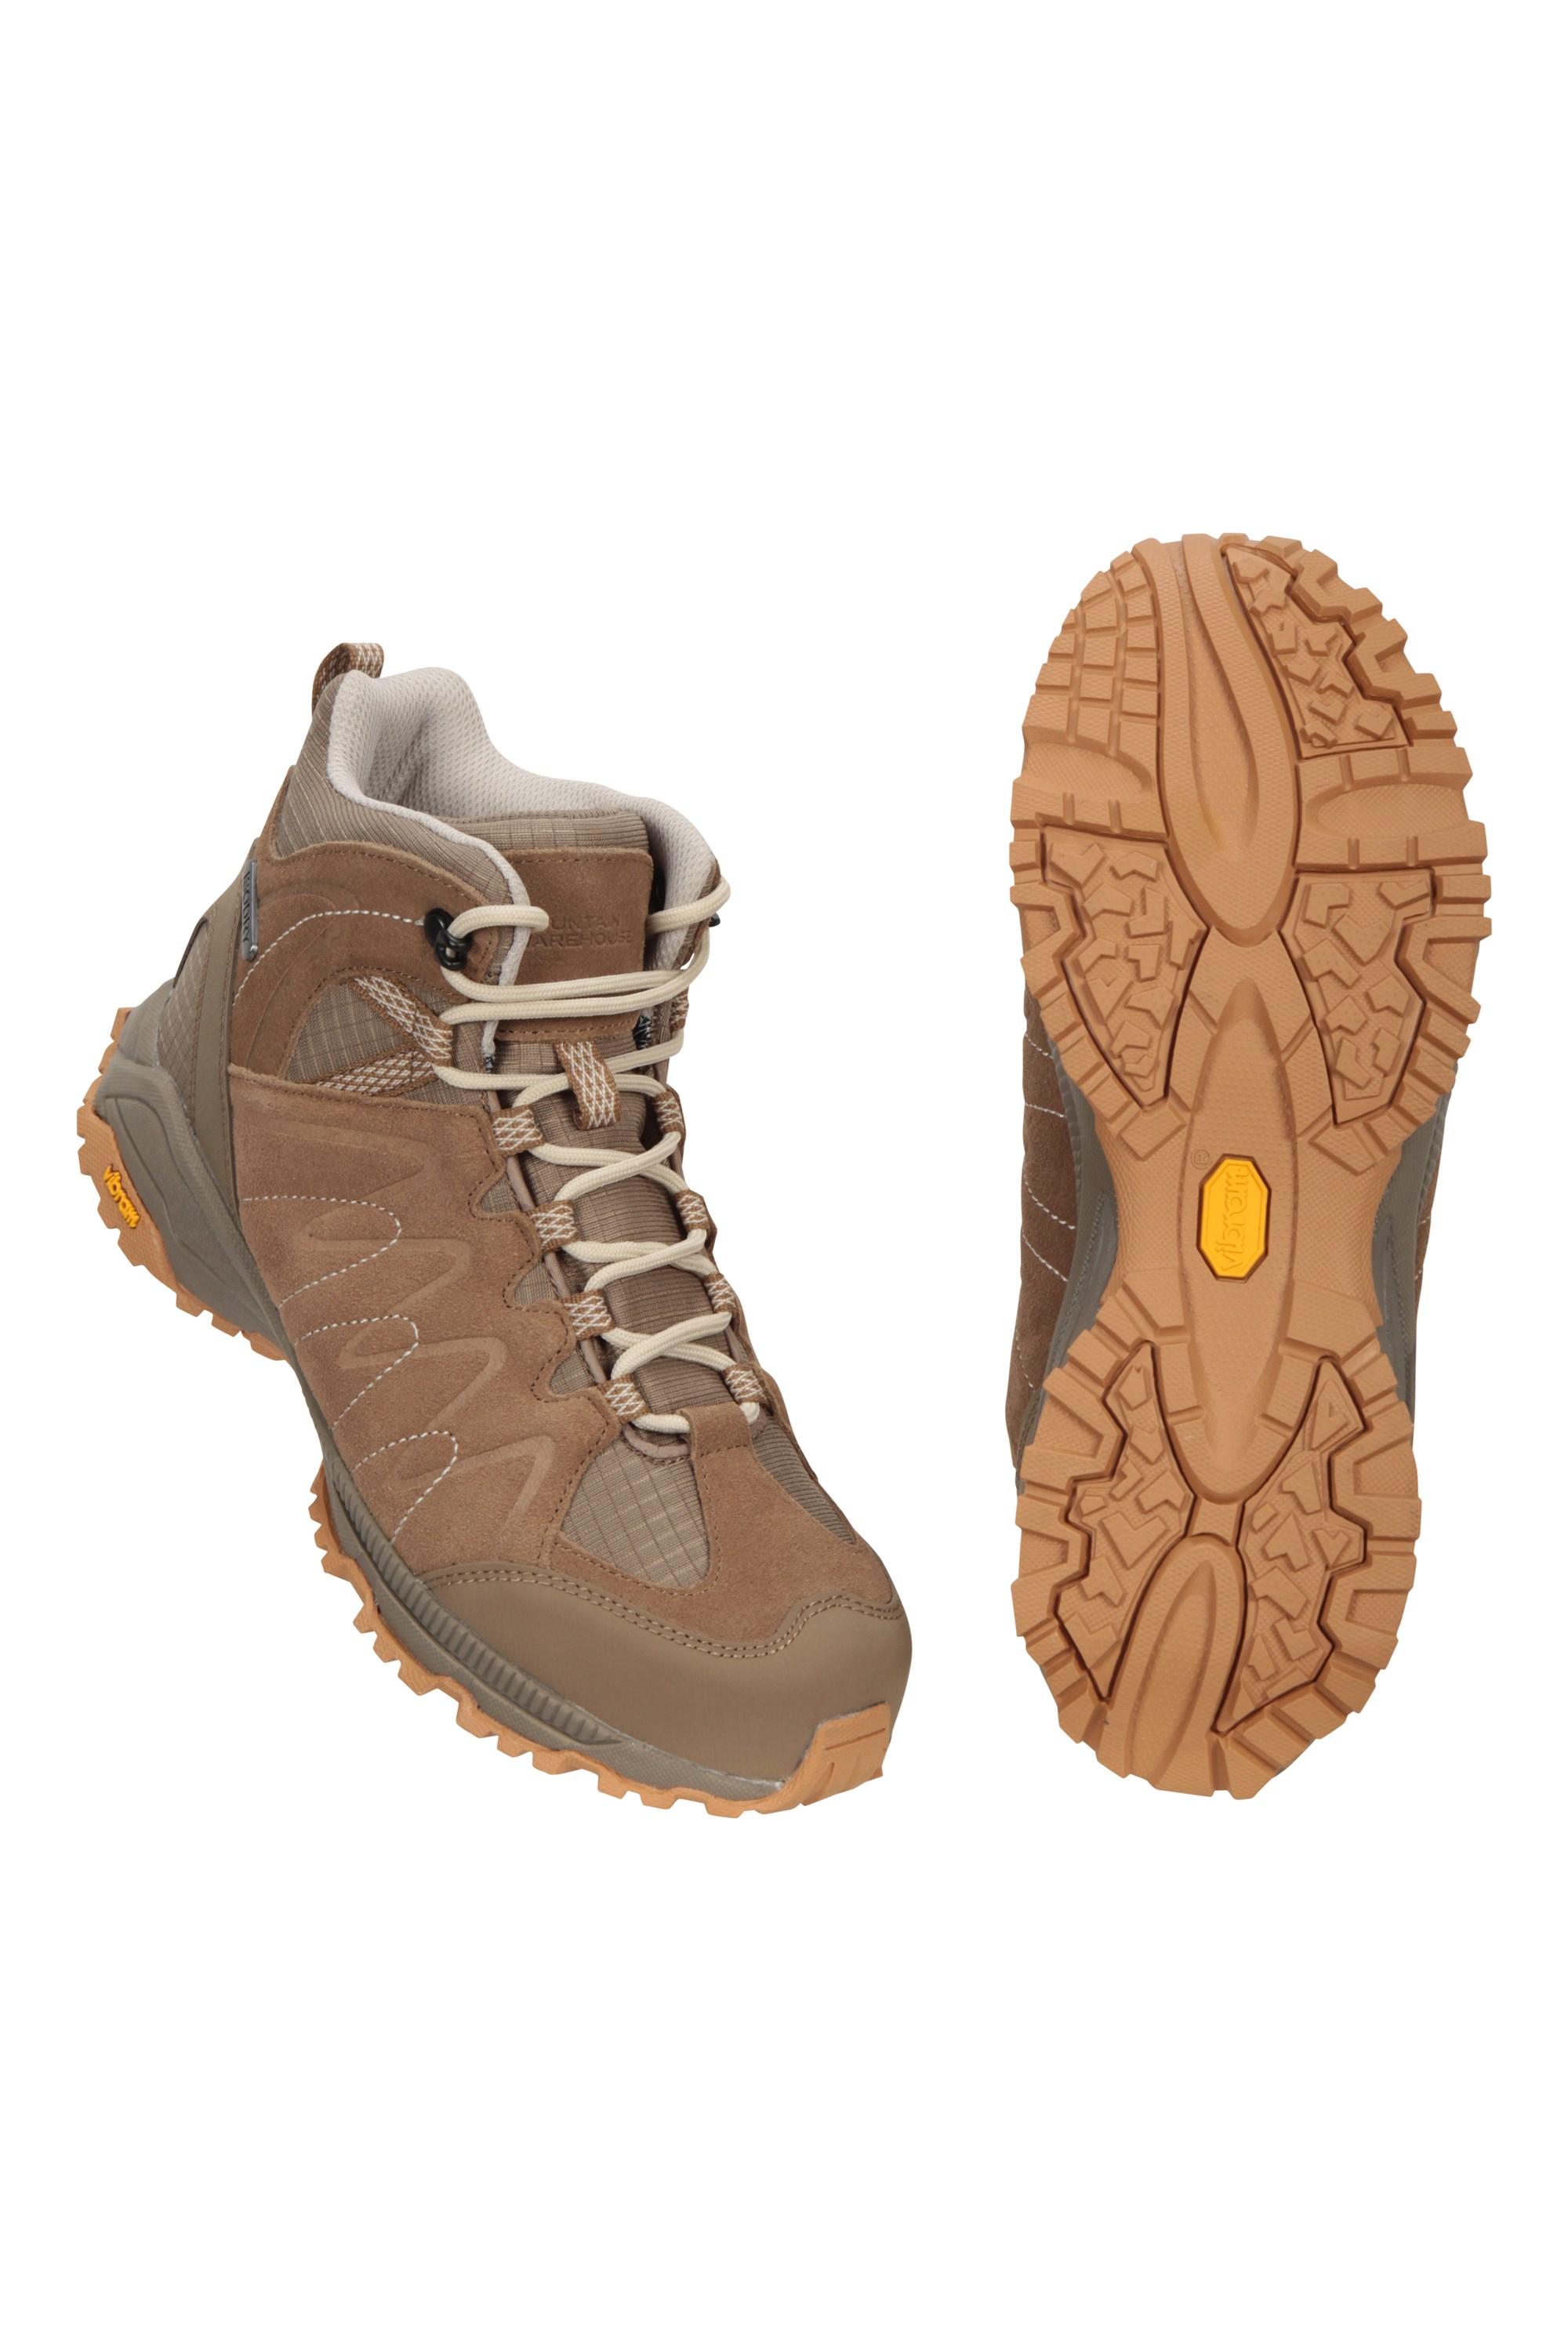 Mountain Warehouse Vibram Womens Waterproof Boots Hiking Shoes Petrol Blue Womens Shoe Size 9 US 